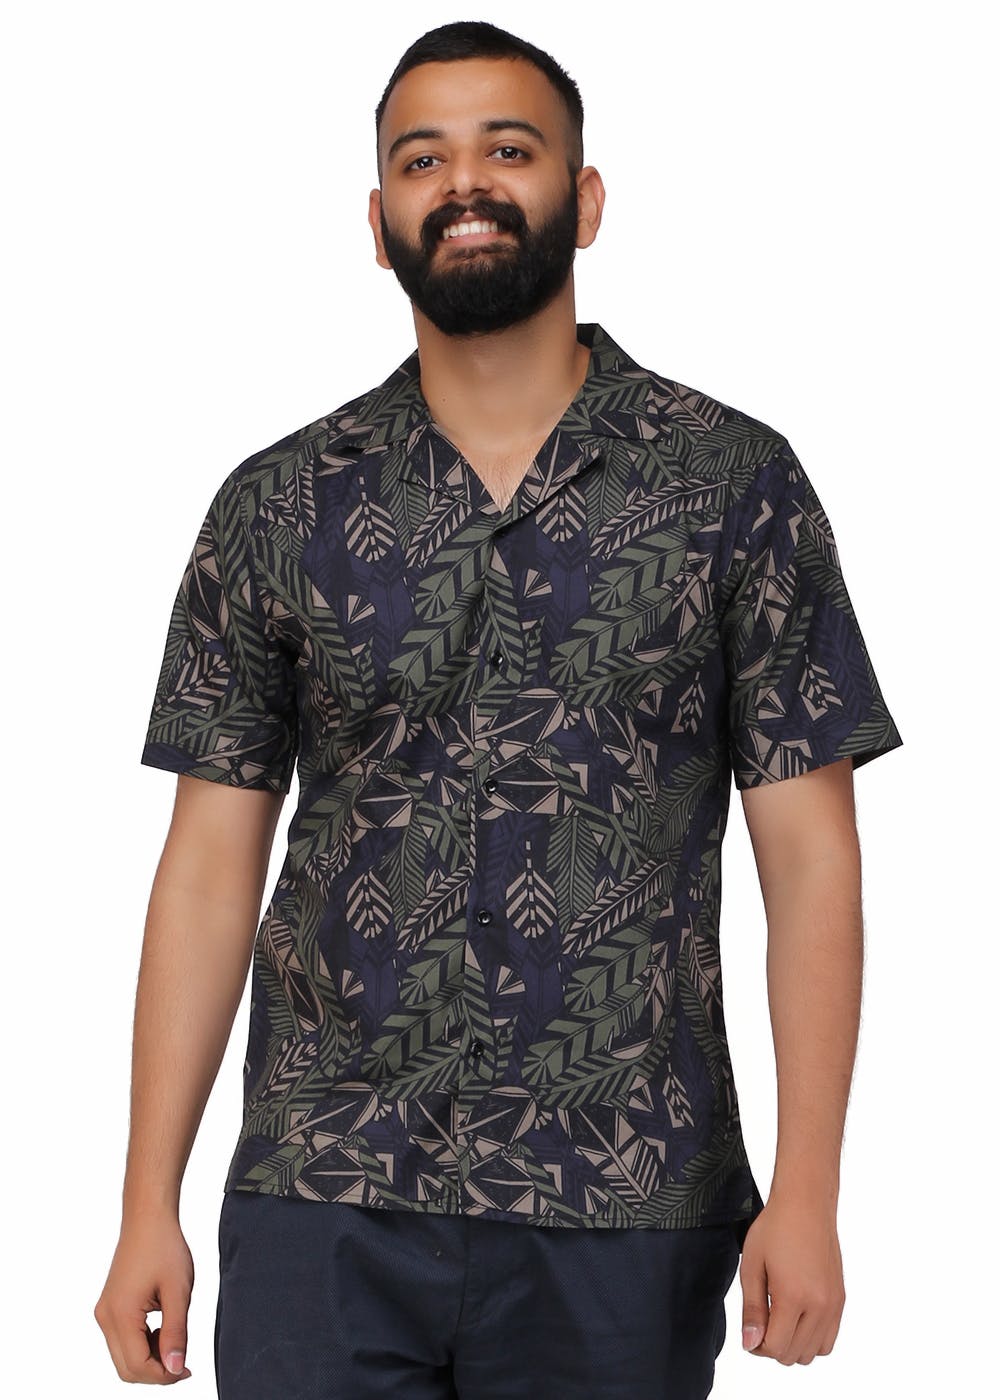 Get Tropical Printed Cuban Collar Shirt at ₹ 999 | LBB Shop